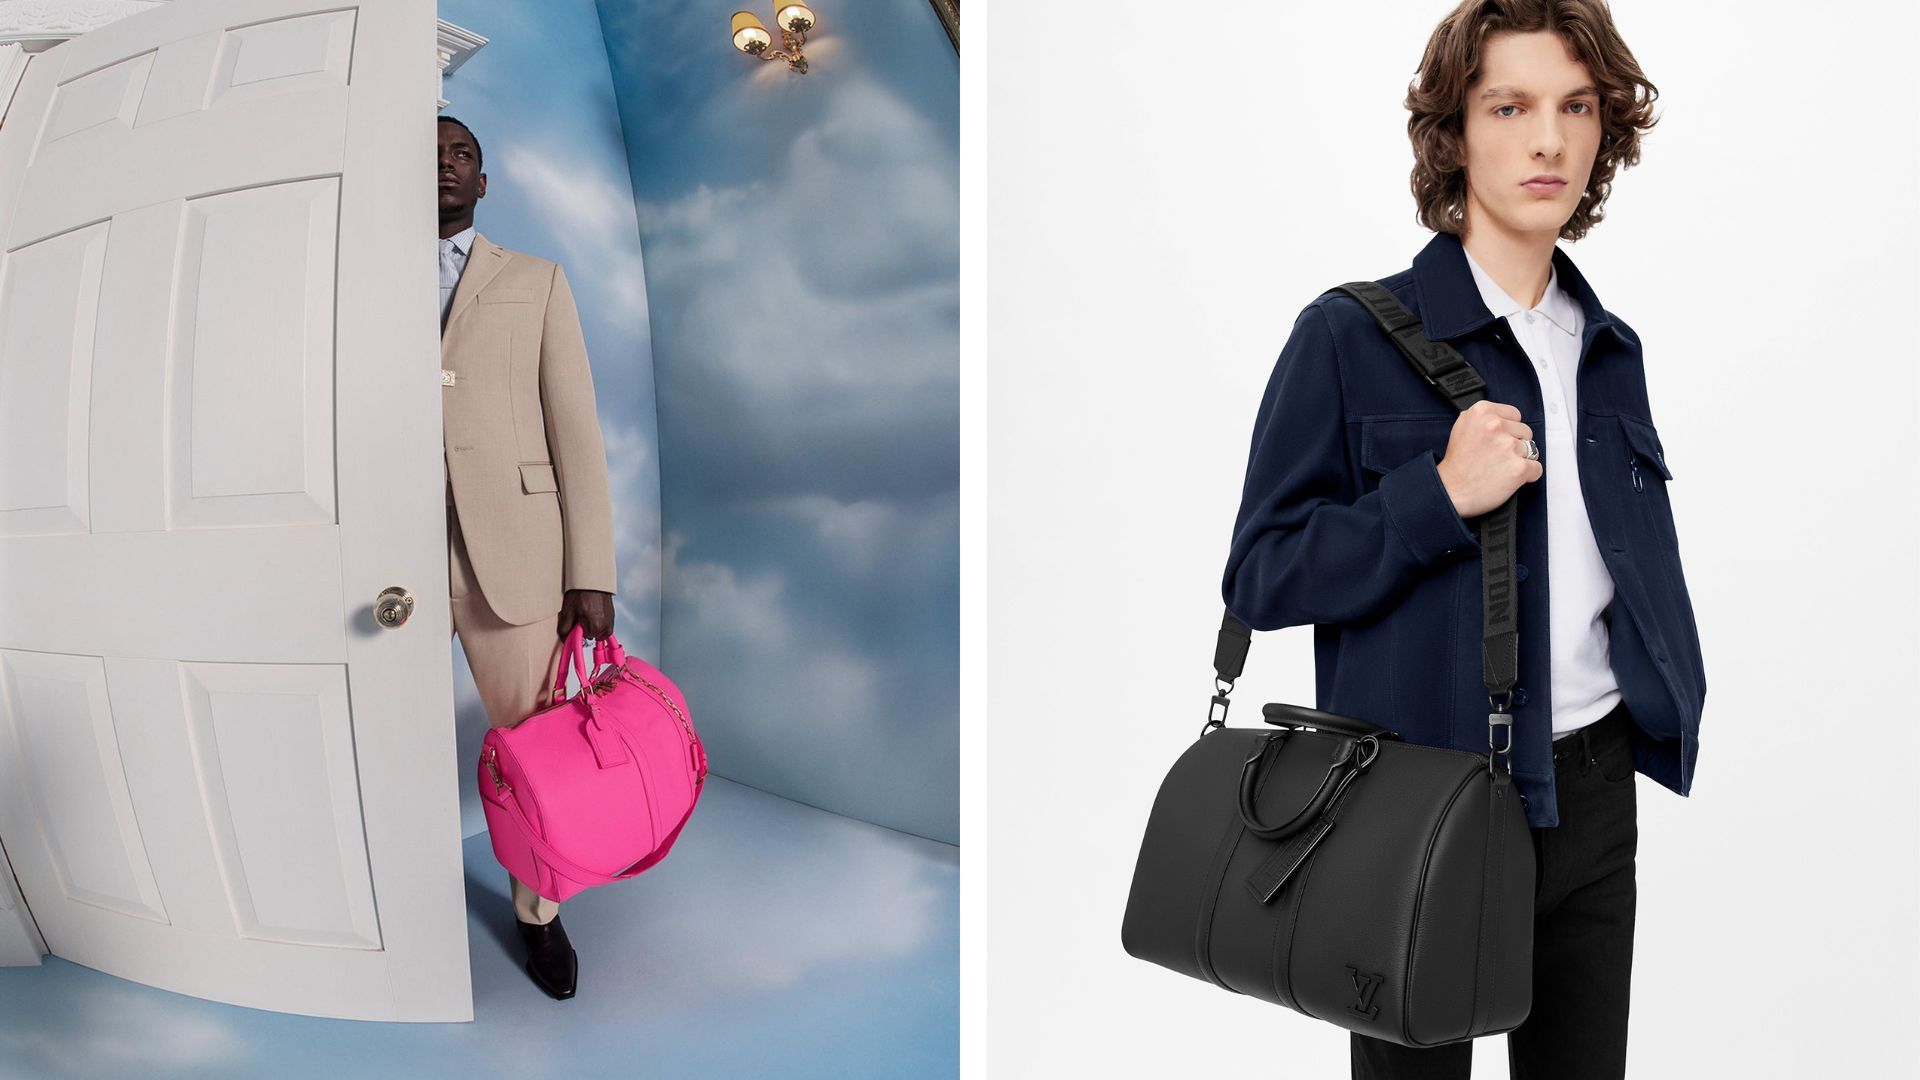 Popular Louis Vuitton handbags price in India